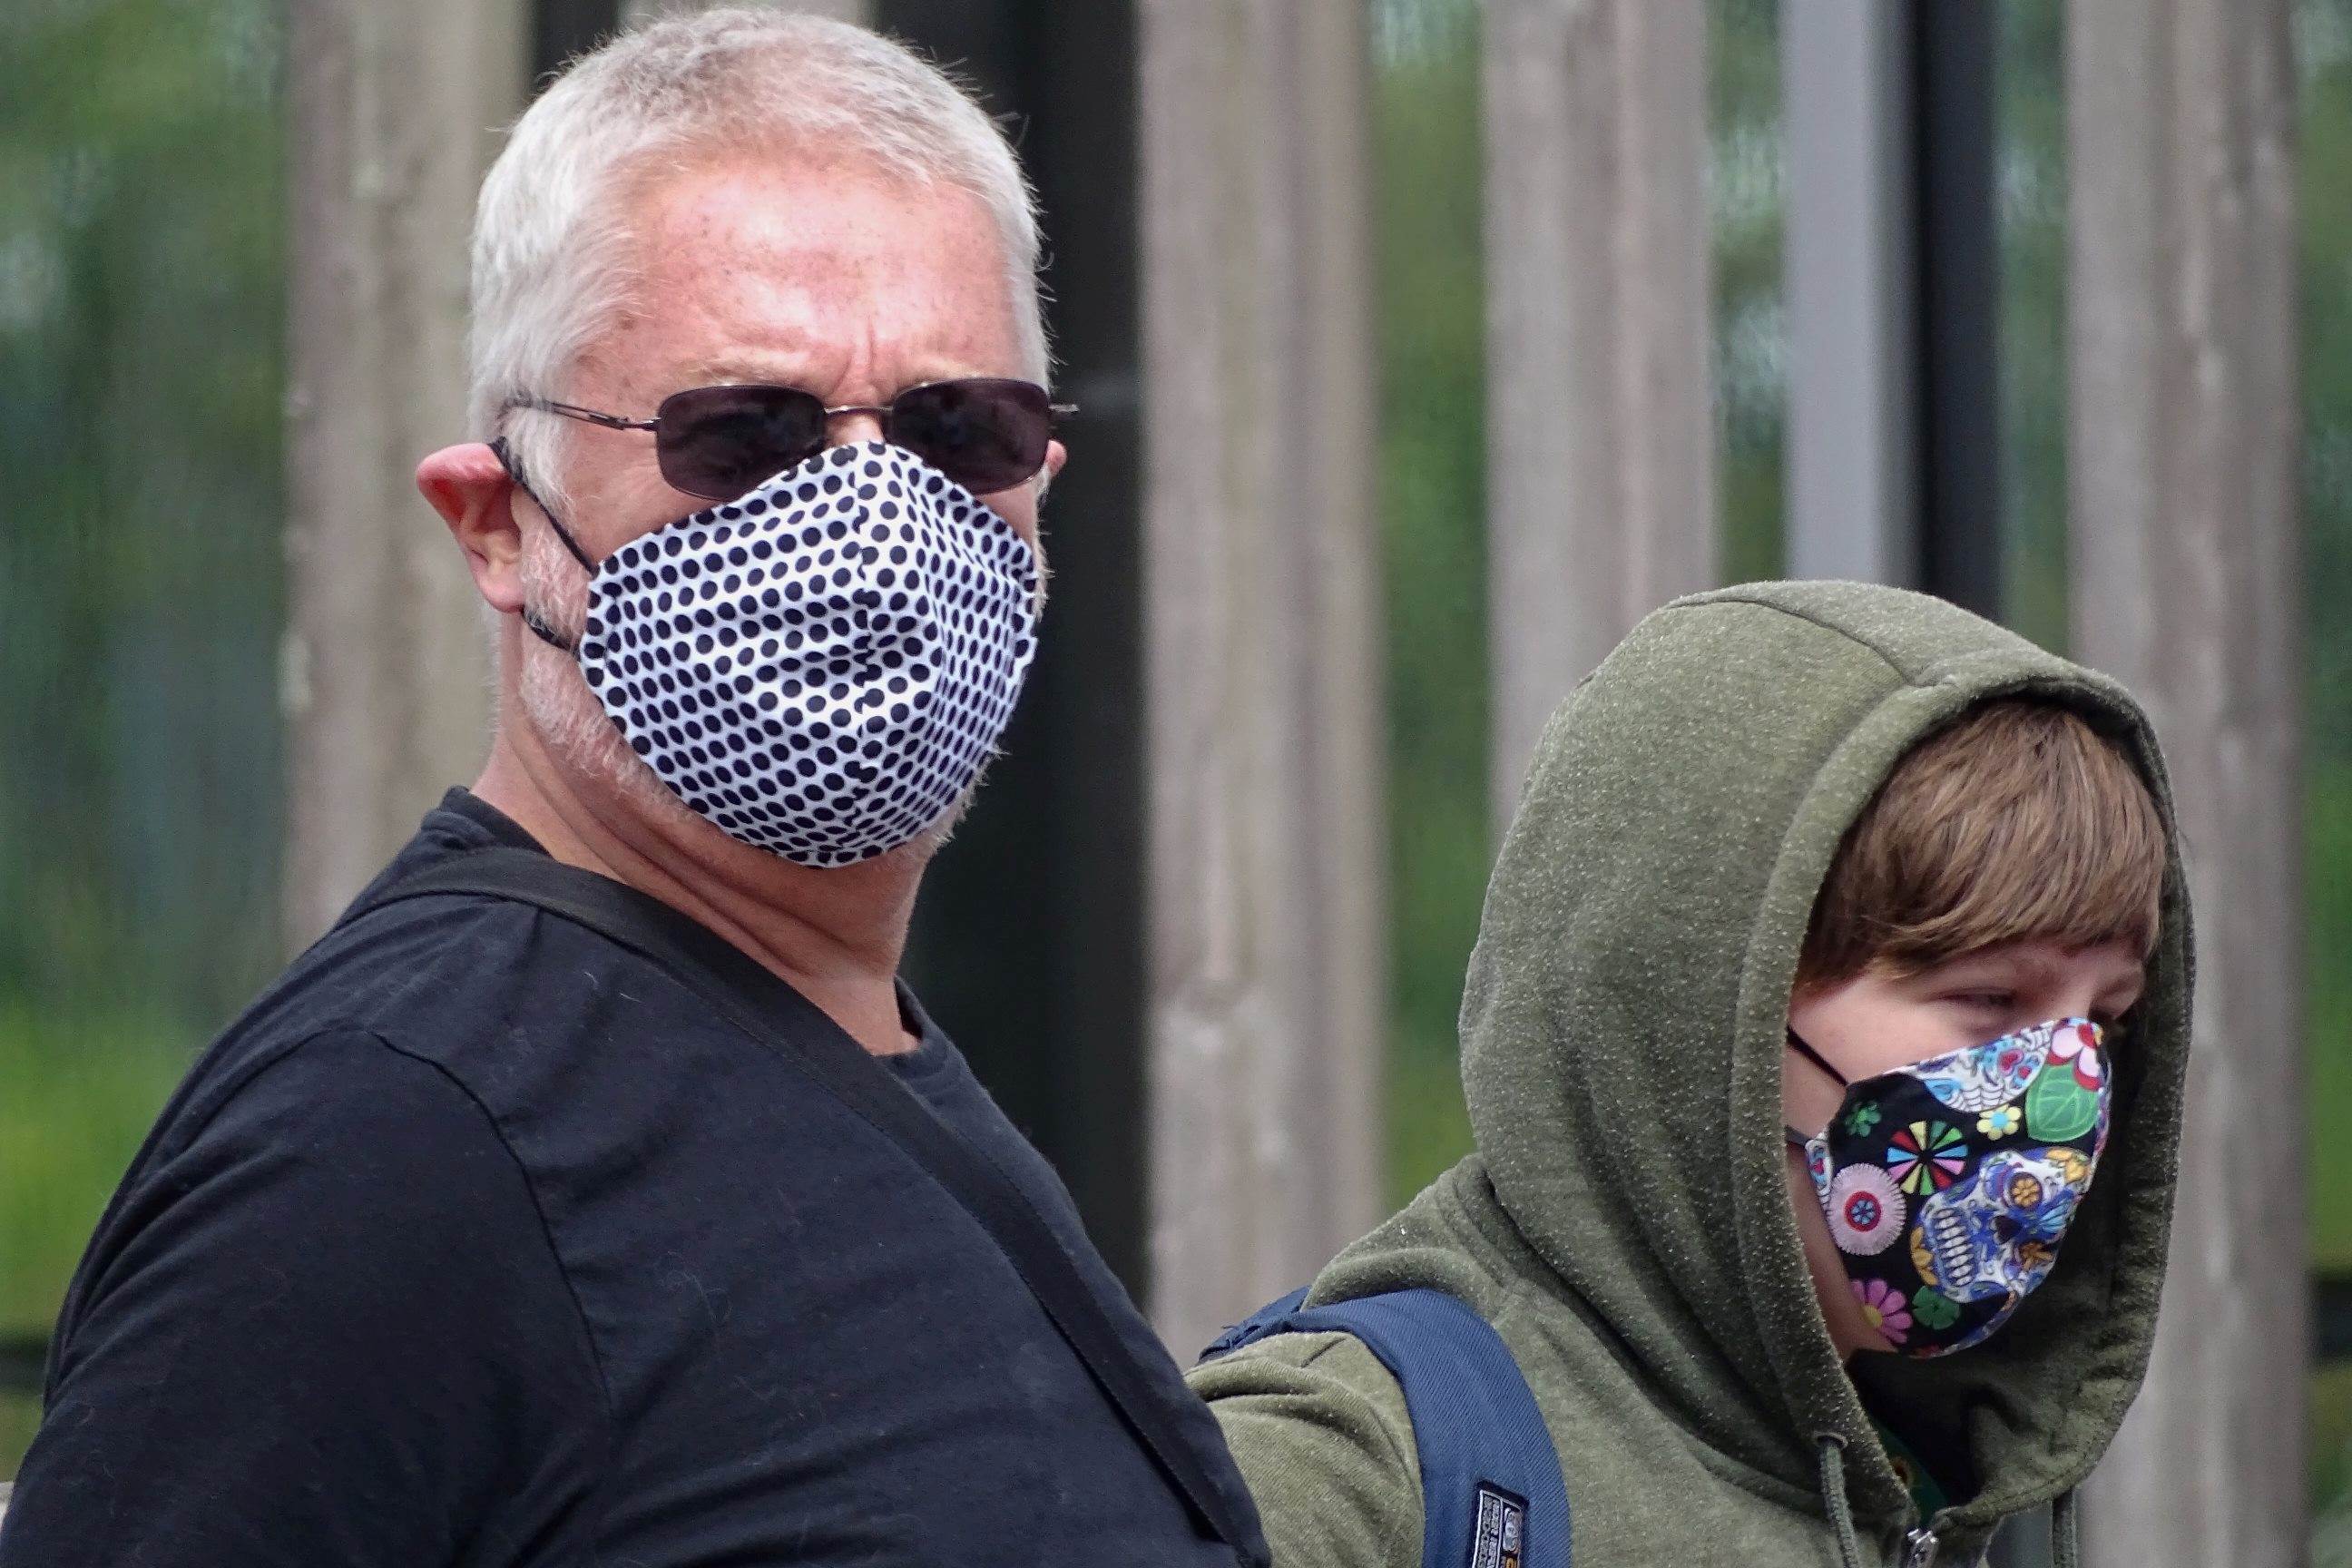 Two people wearing masks